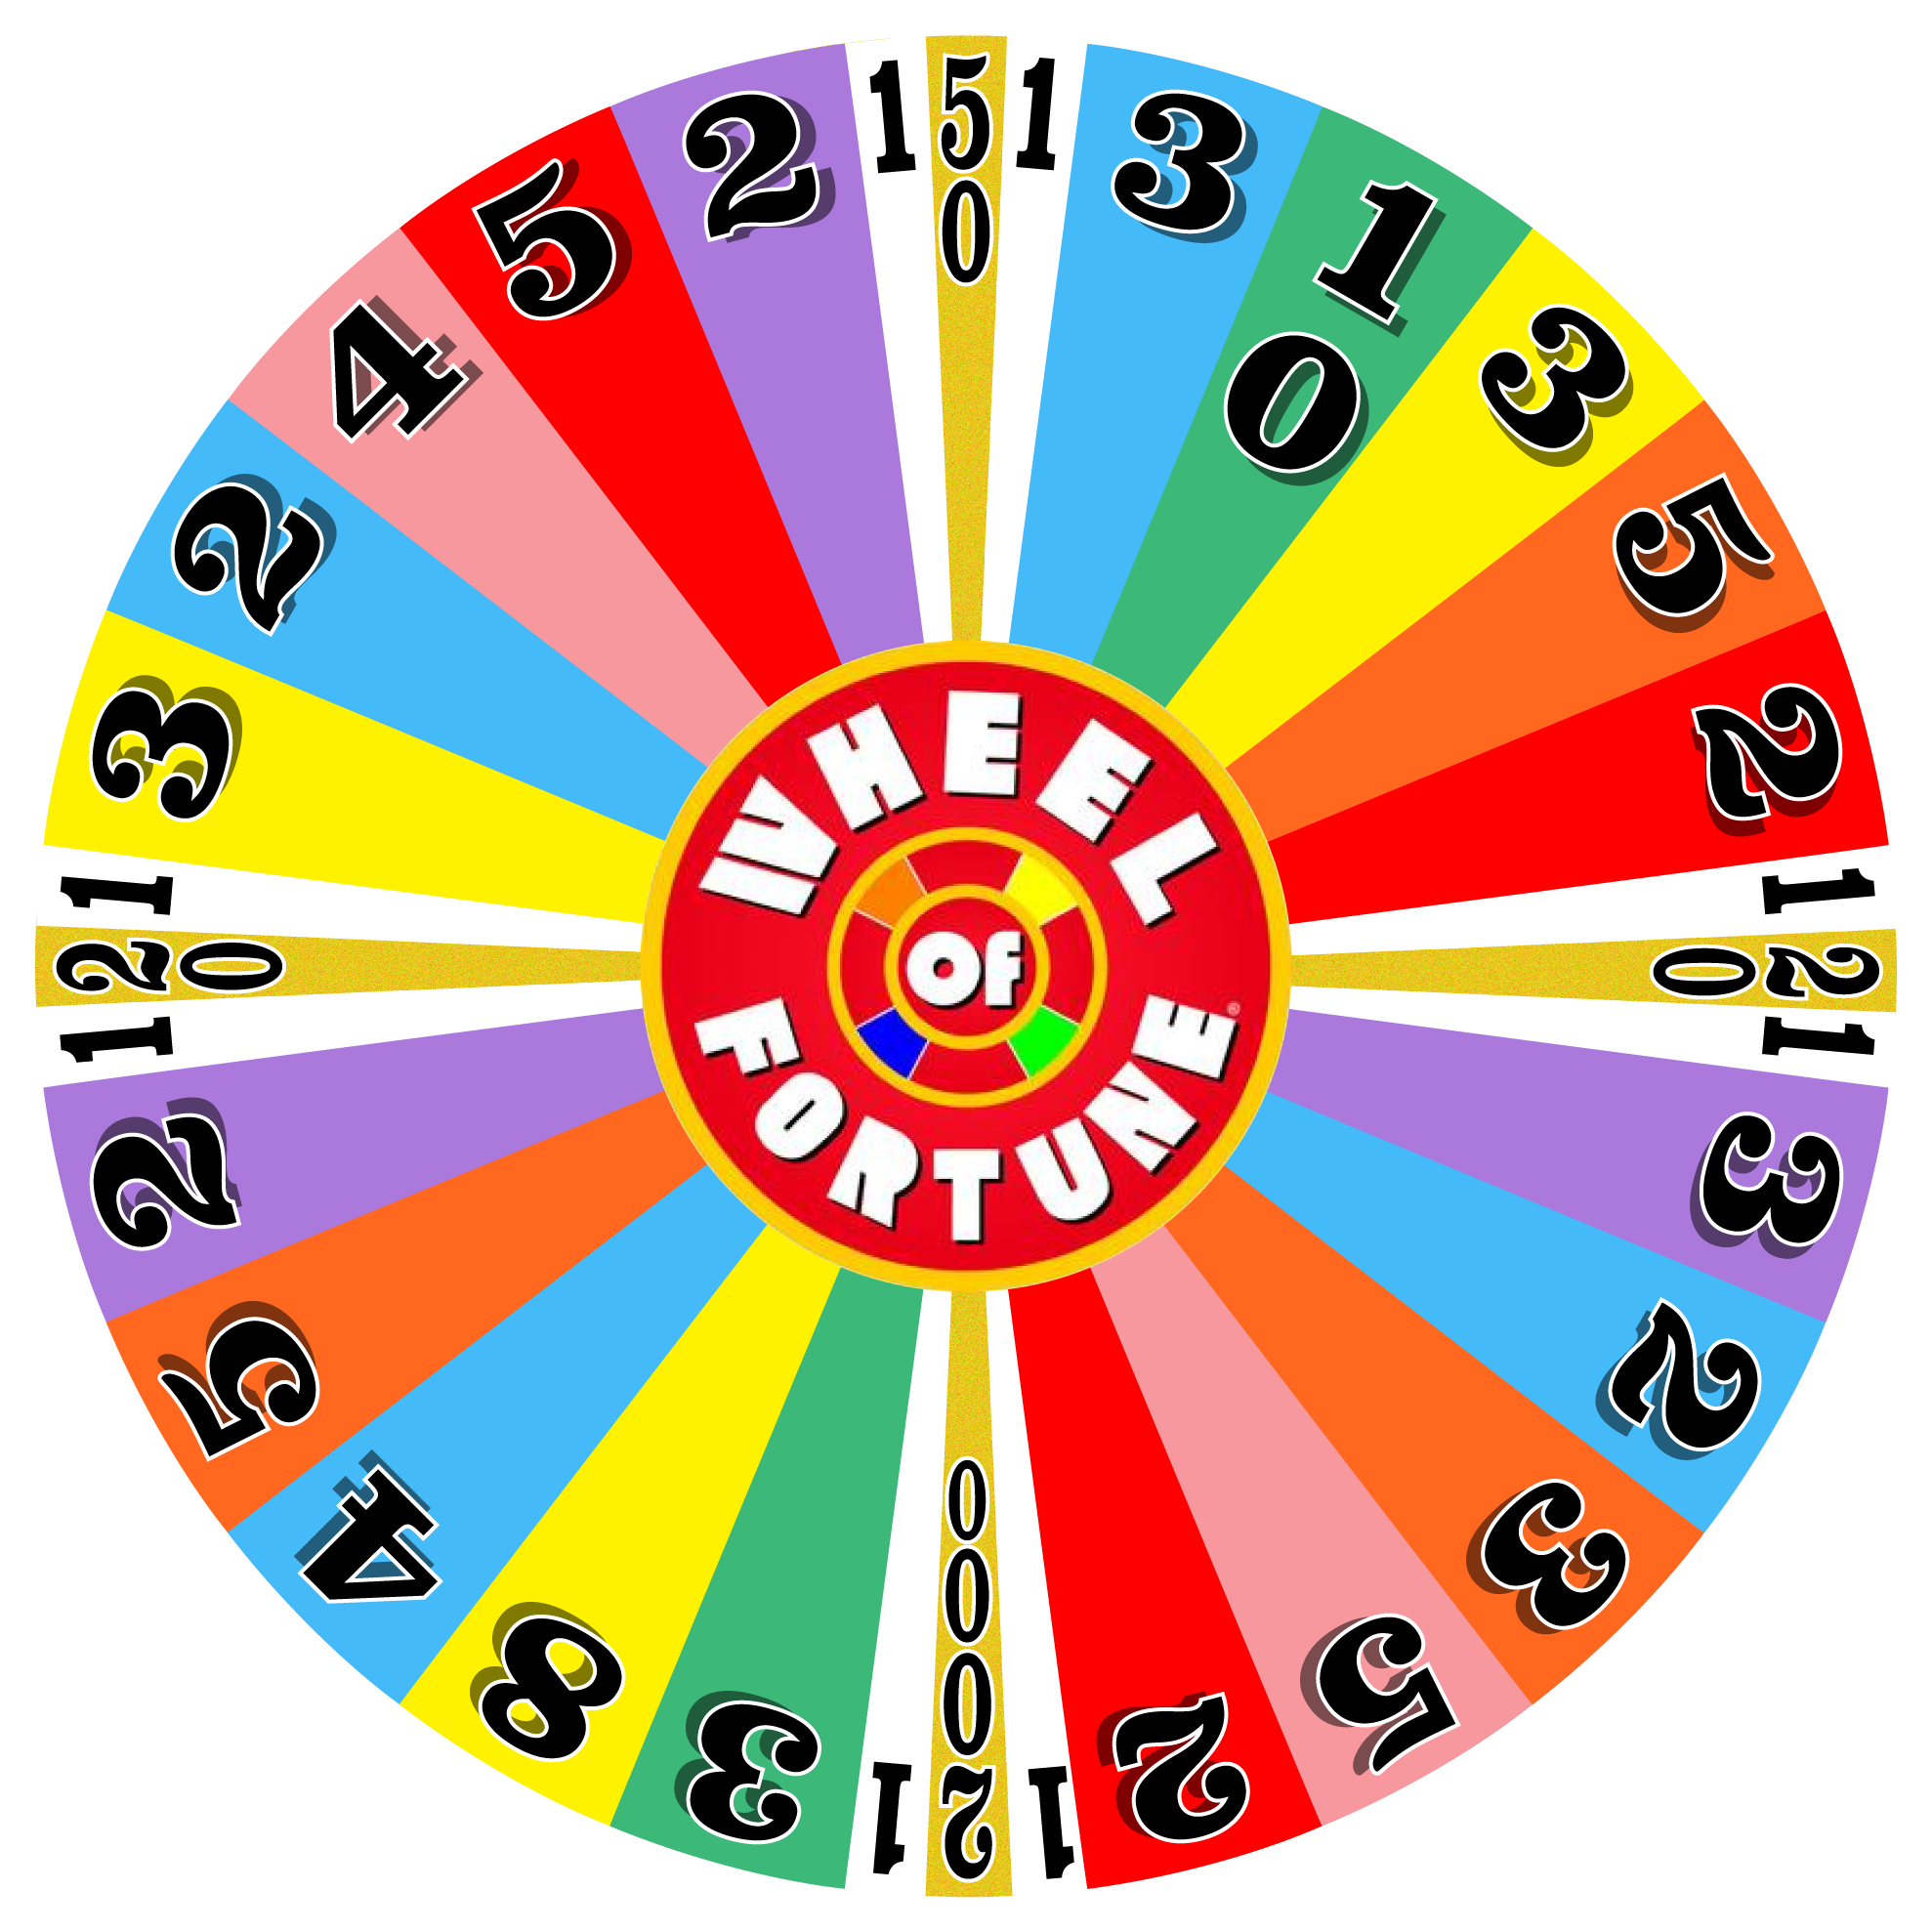 Wheel of fortune 2 fully cracked : kunvingtu1978 x 1978